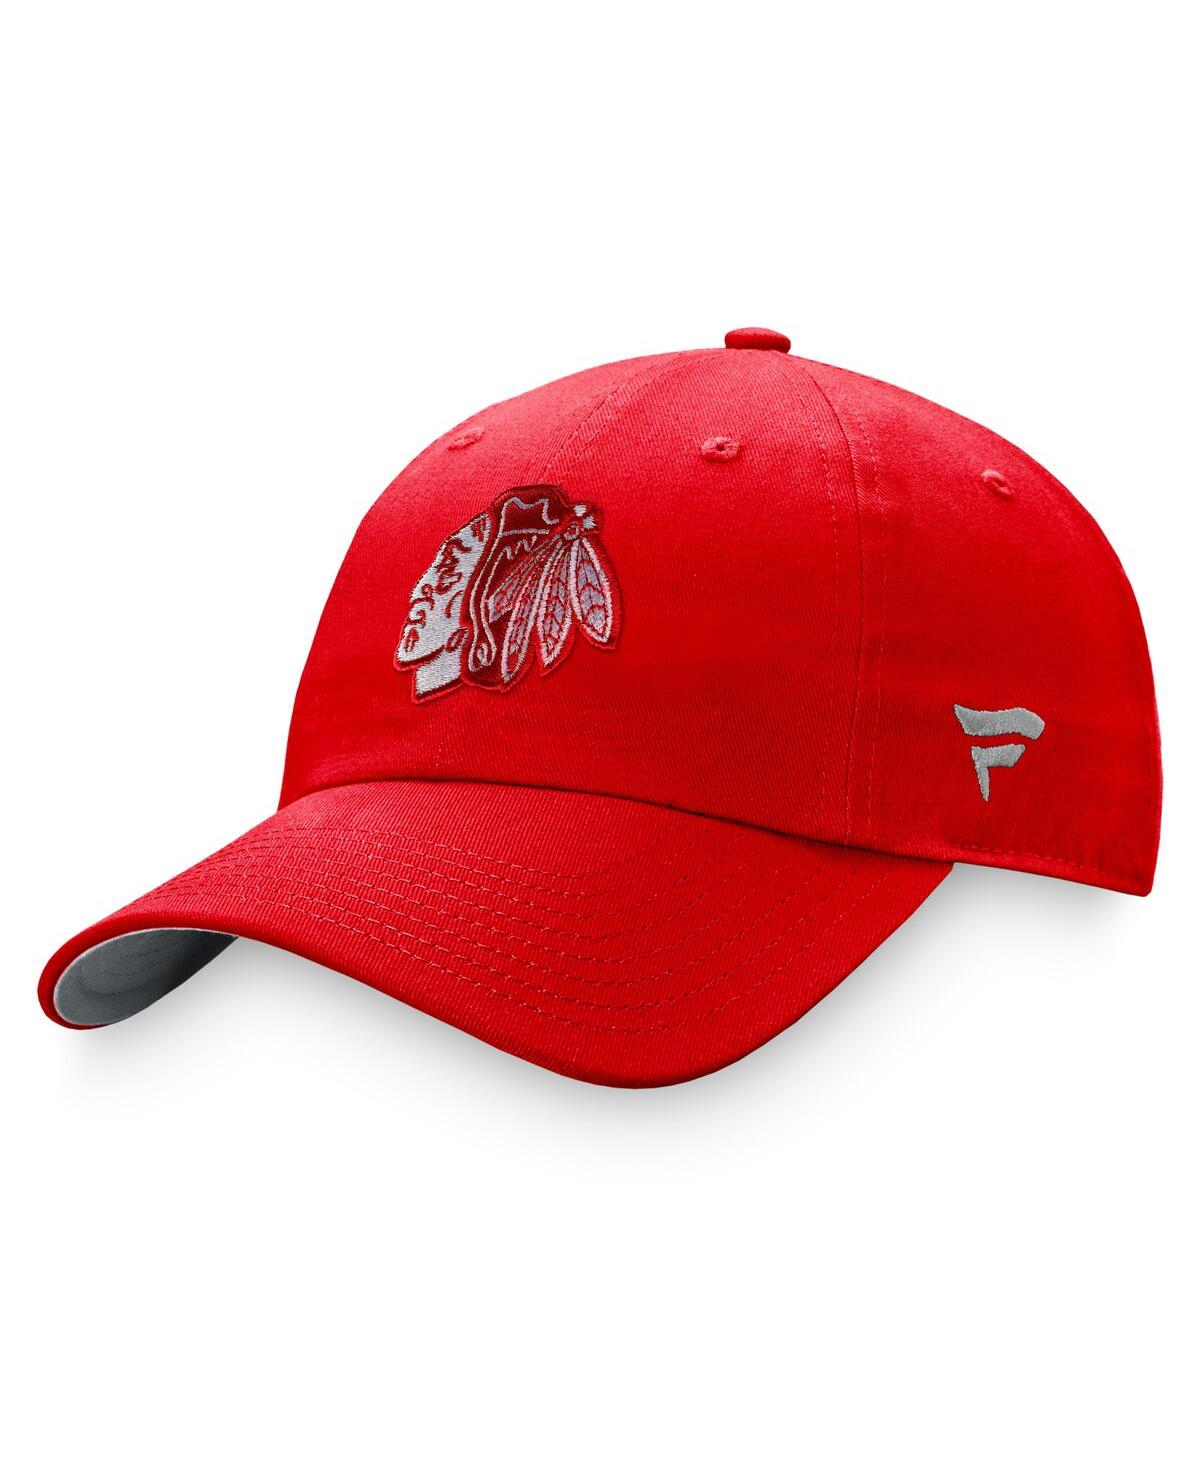 Fanatics Women's  Red Chicago Blackhawks Iconic Glimmer Adjustable Hat